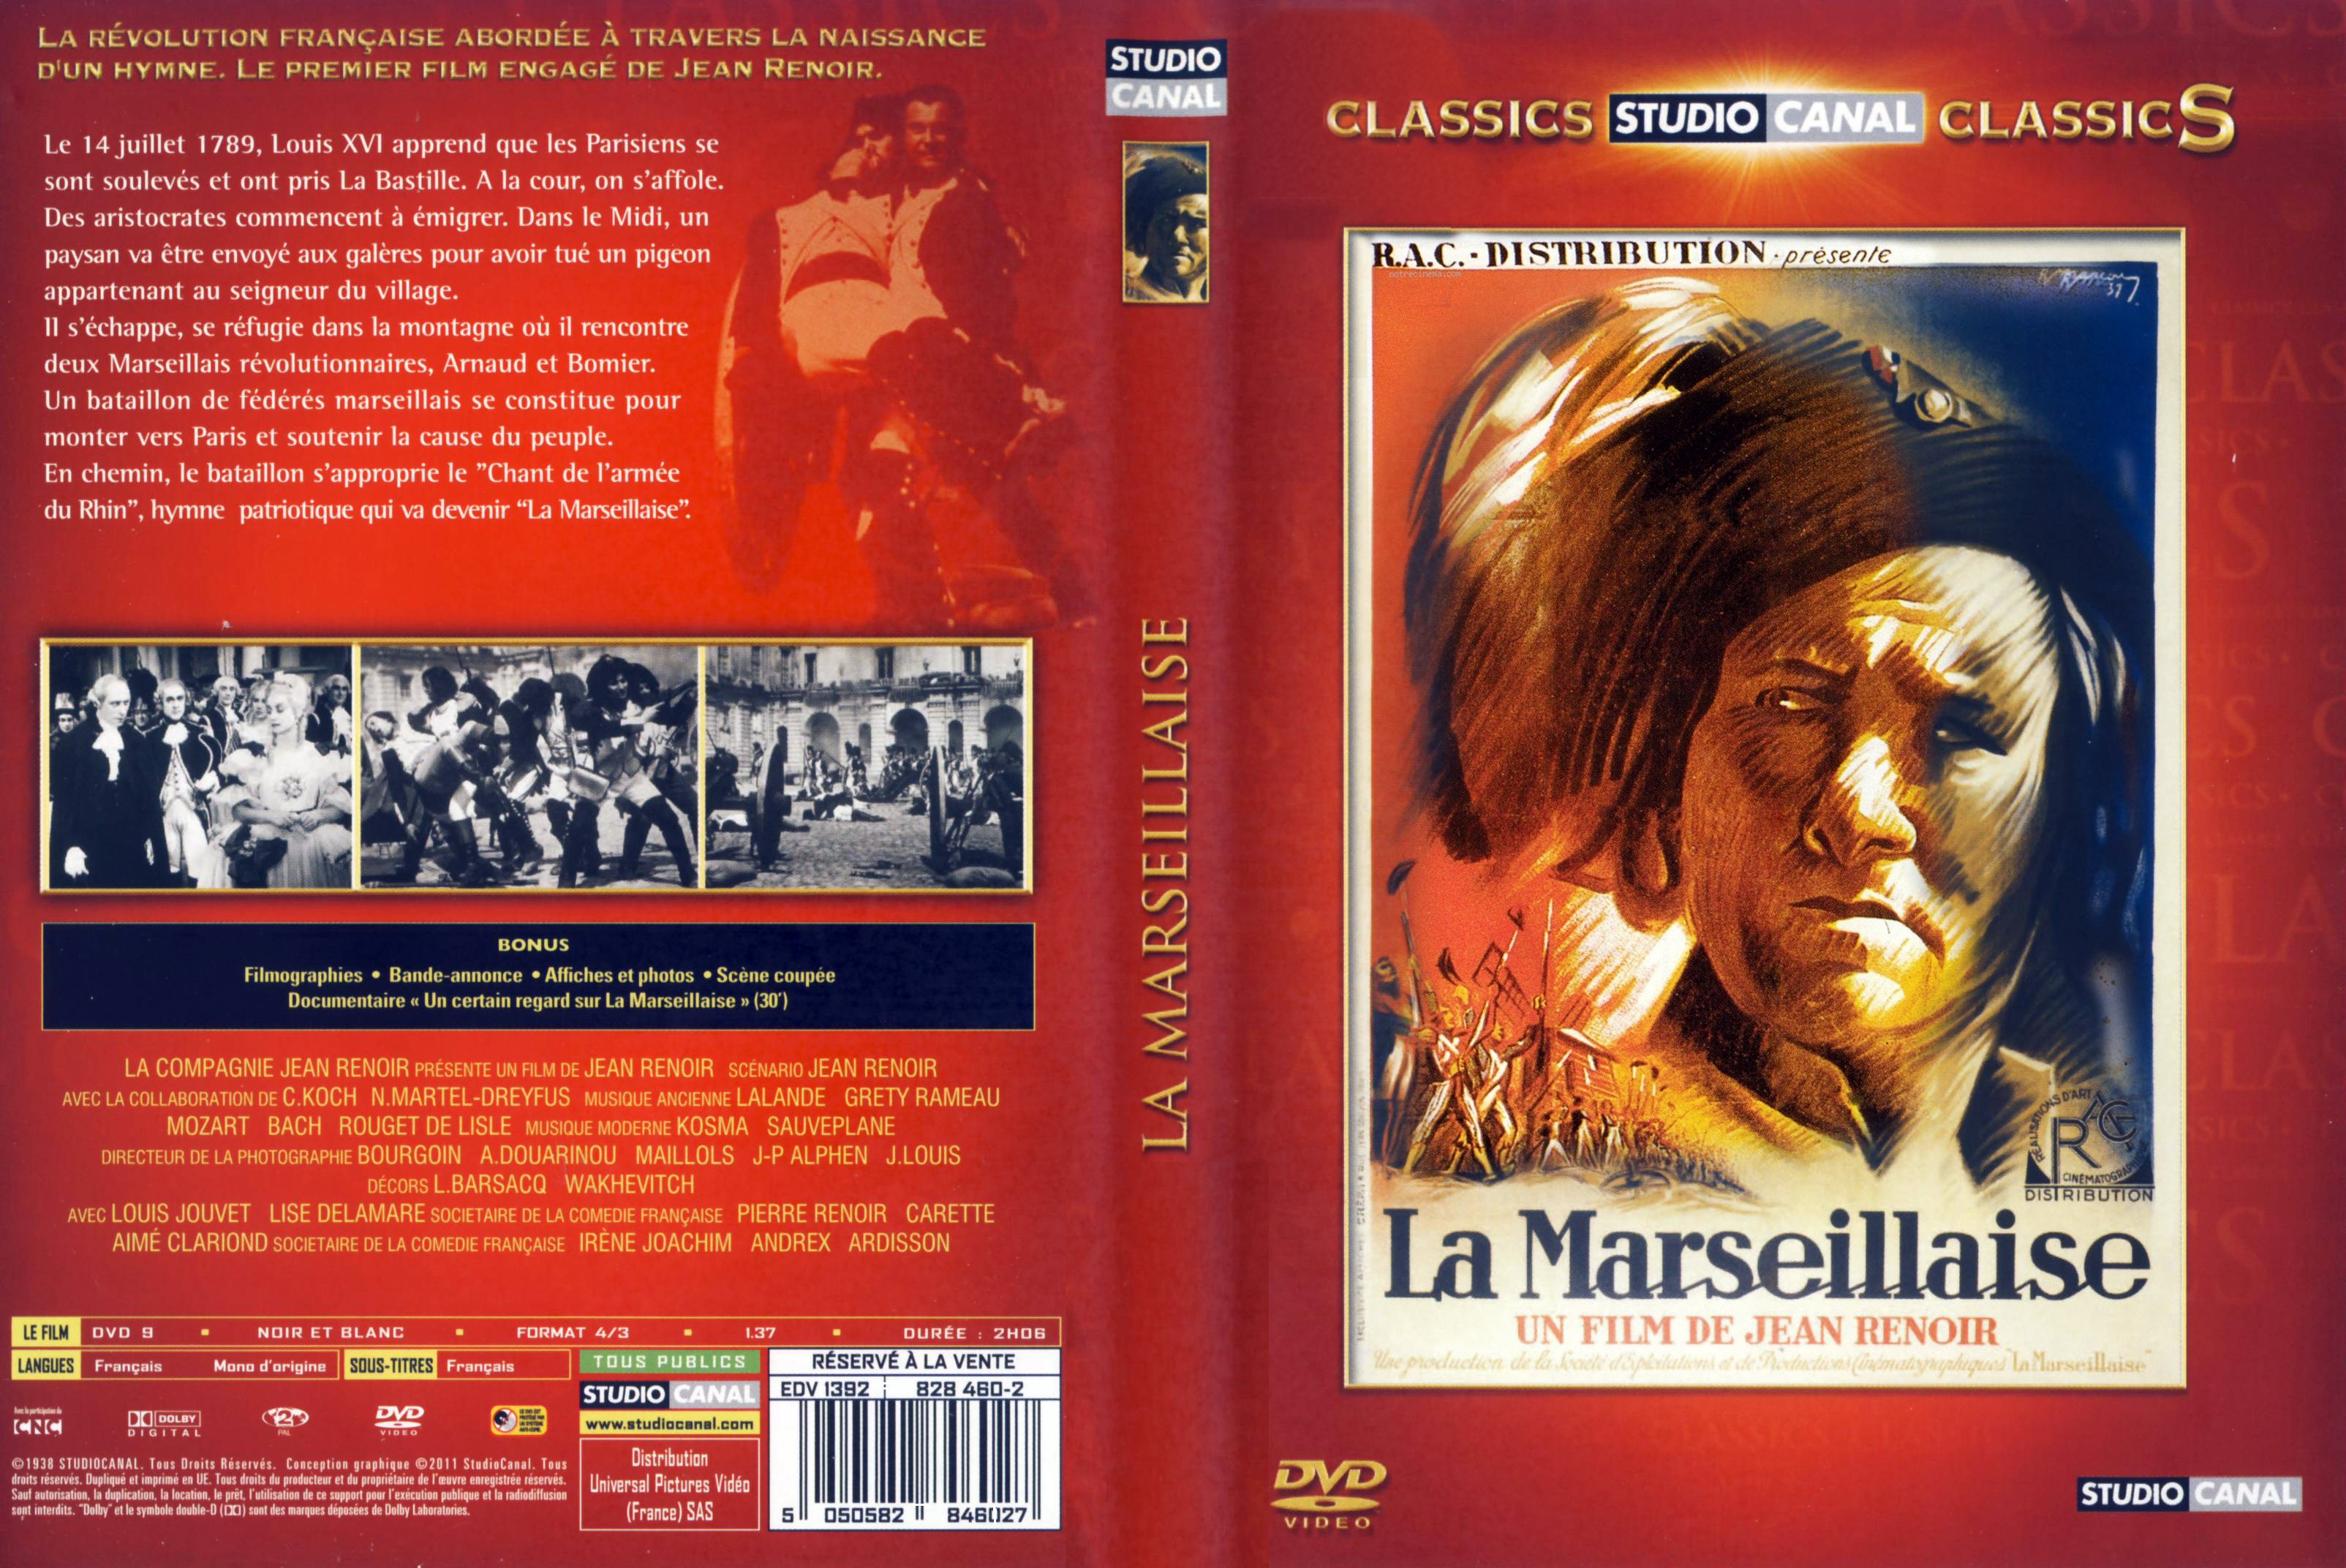 Jaquette DVD La Marseillaise v2